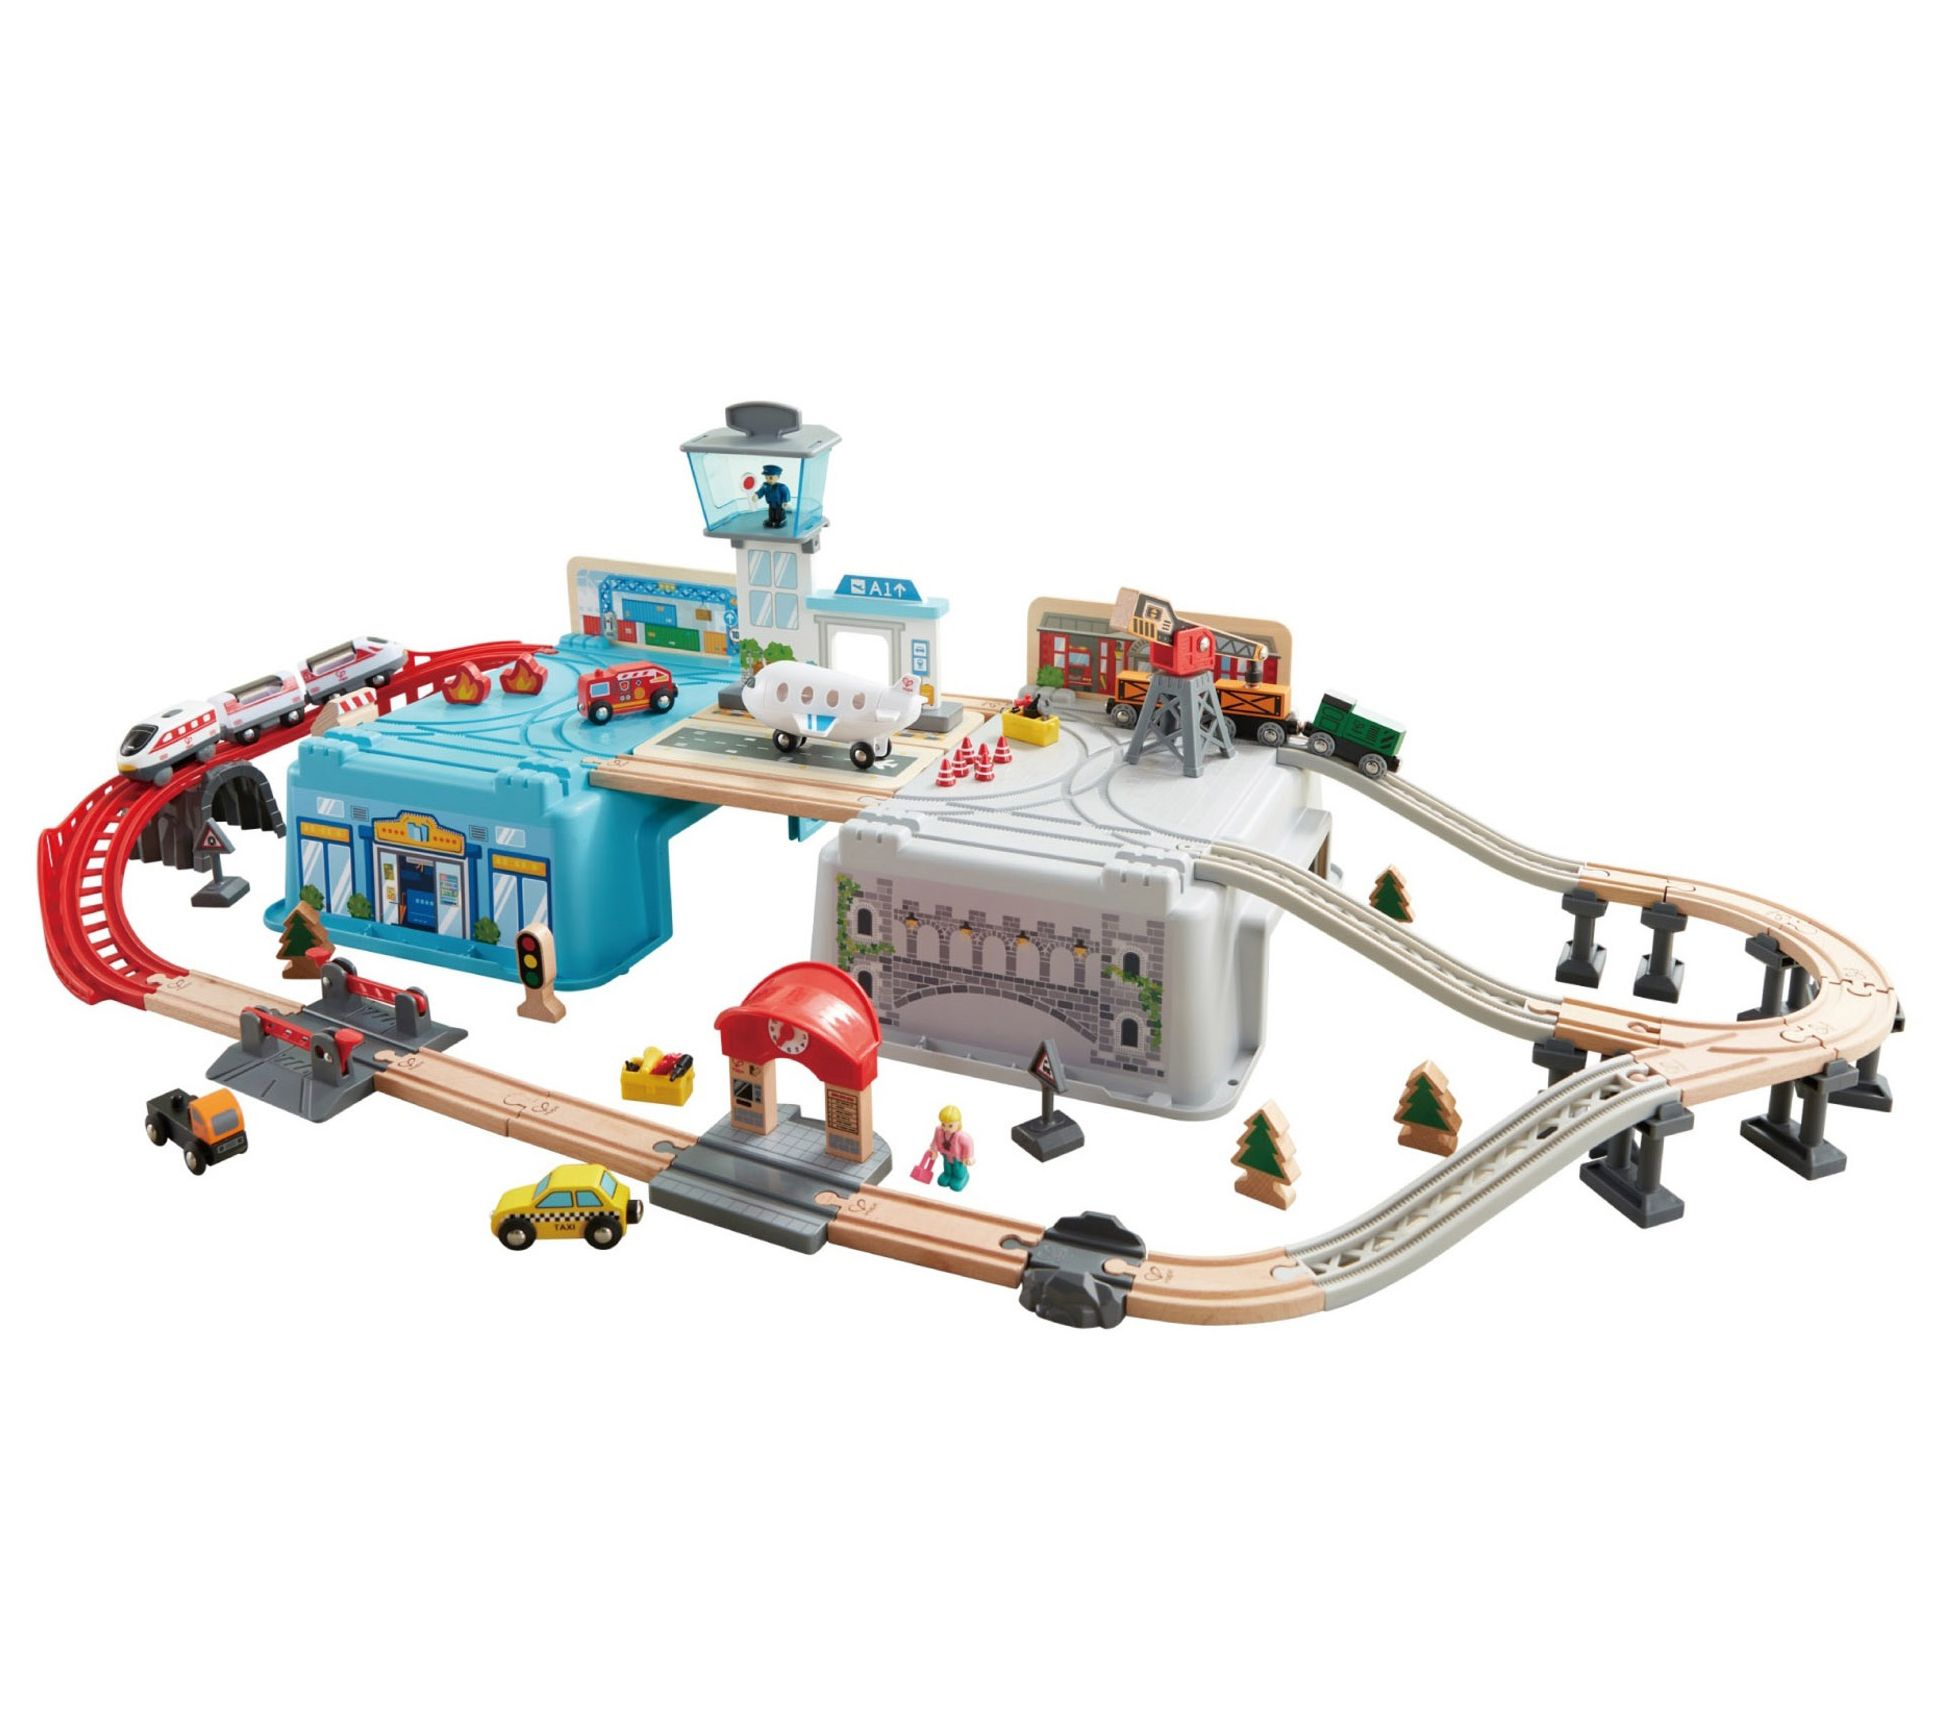 Grand City Station Train Set - Toys & Co. - HaPe